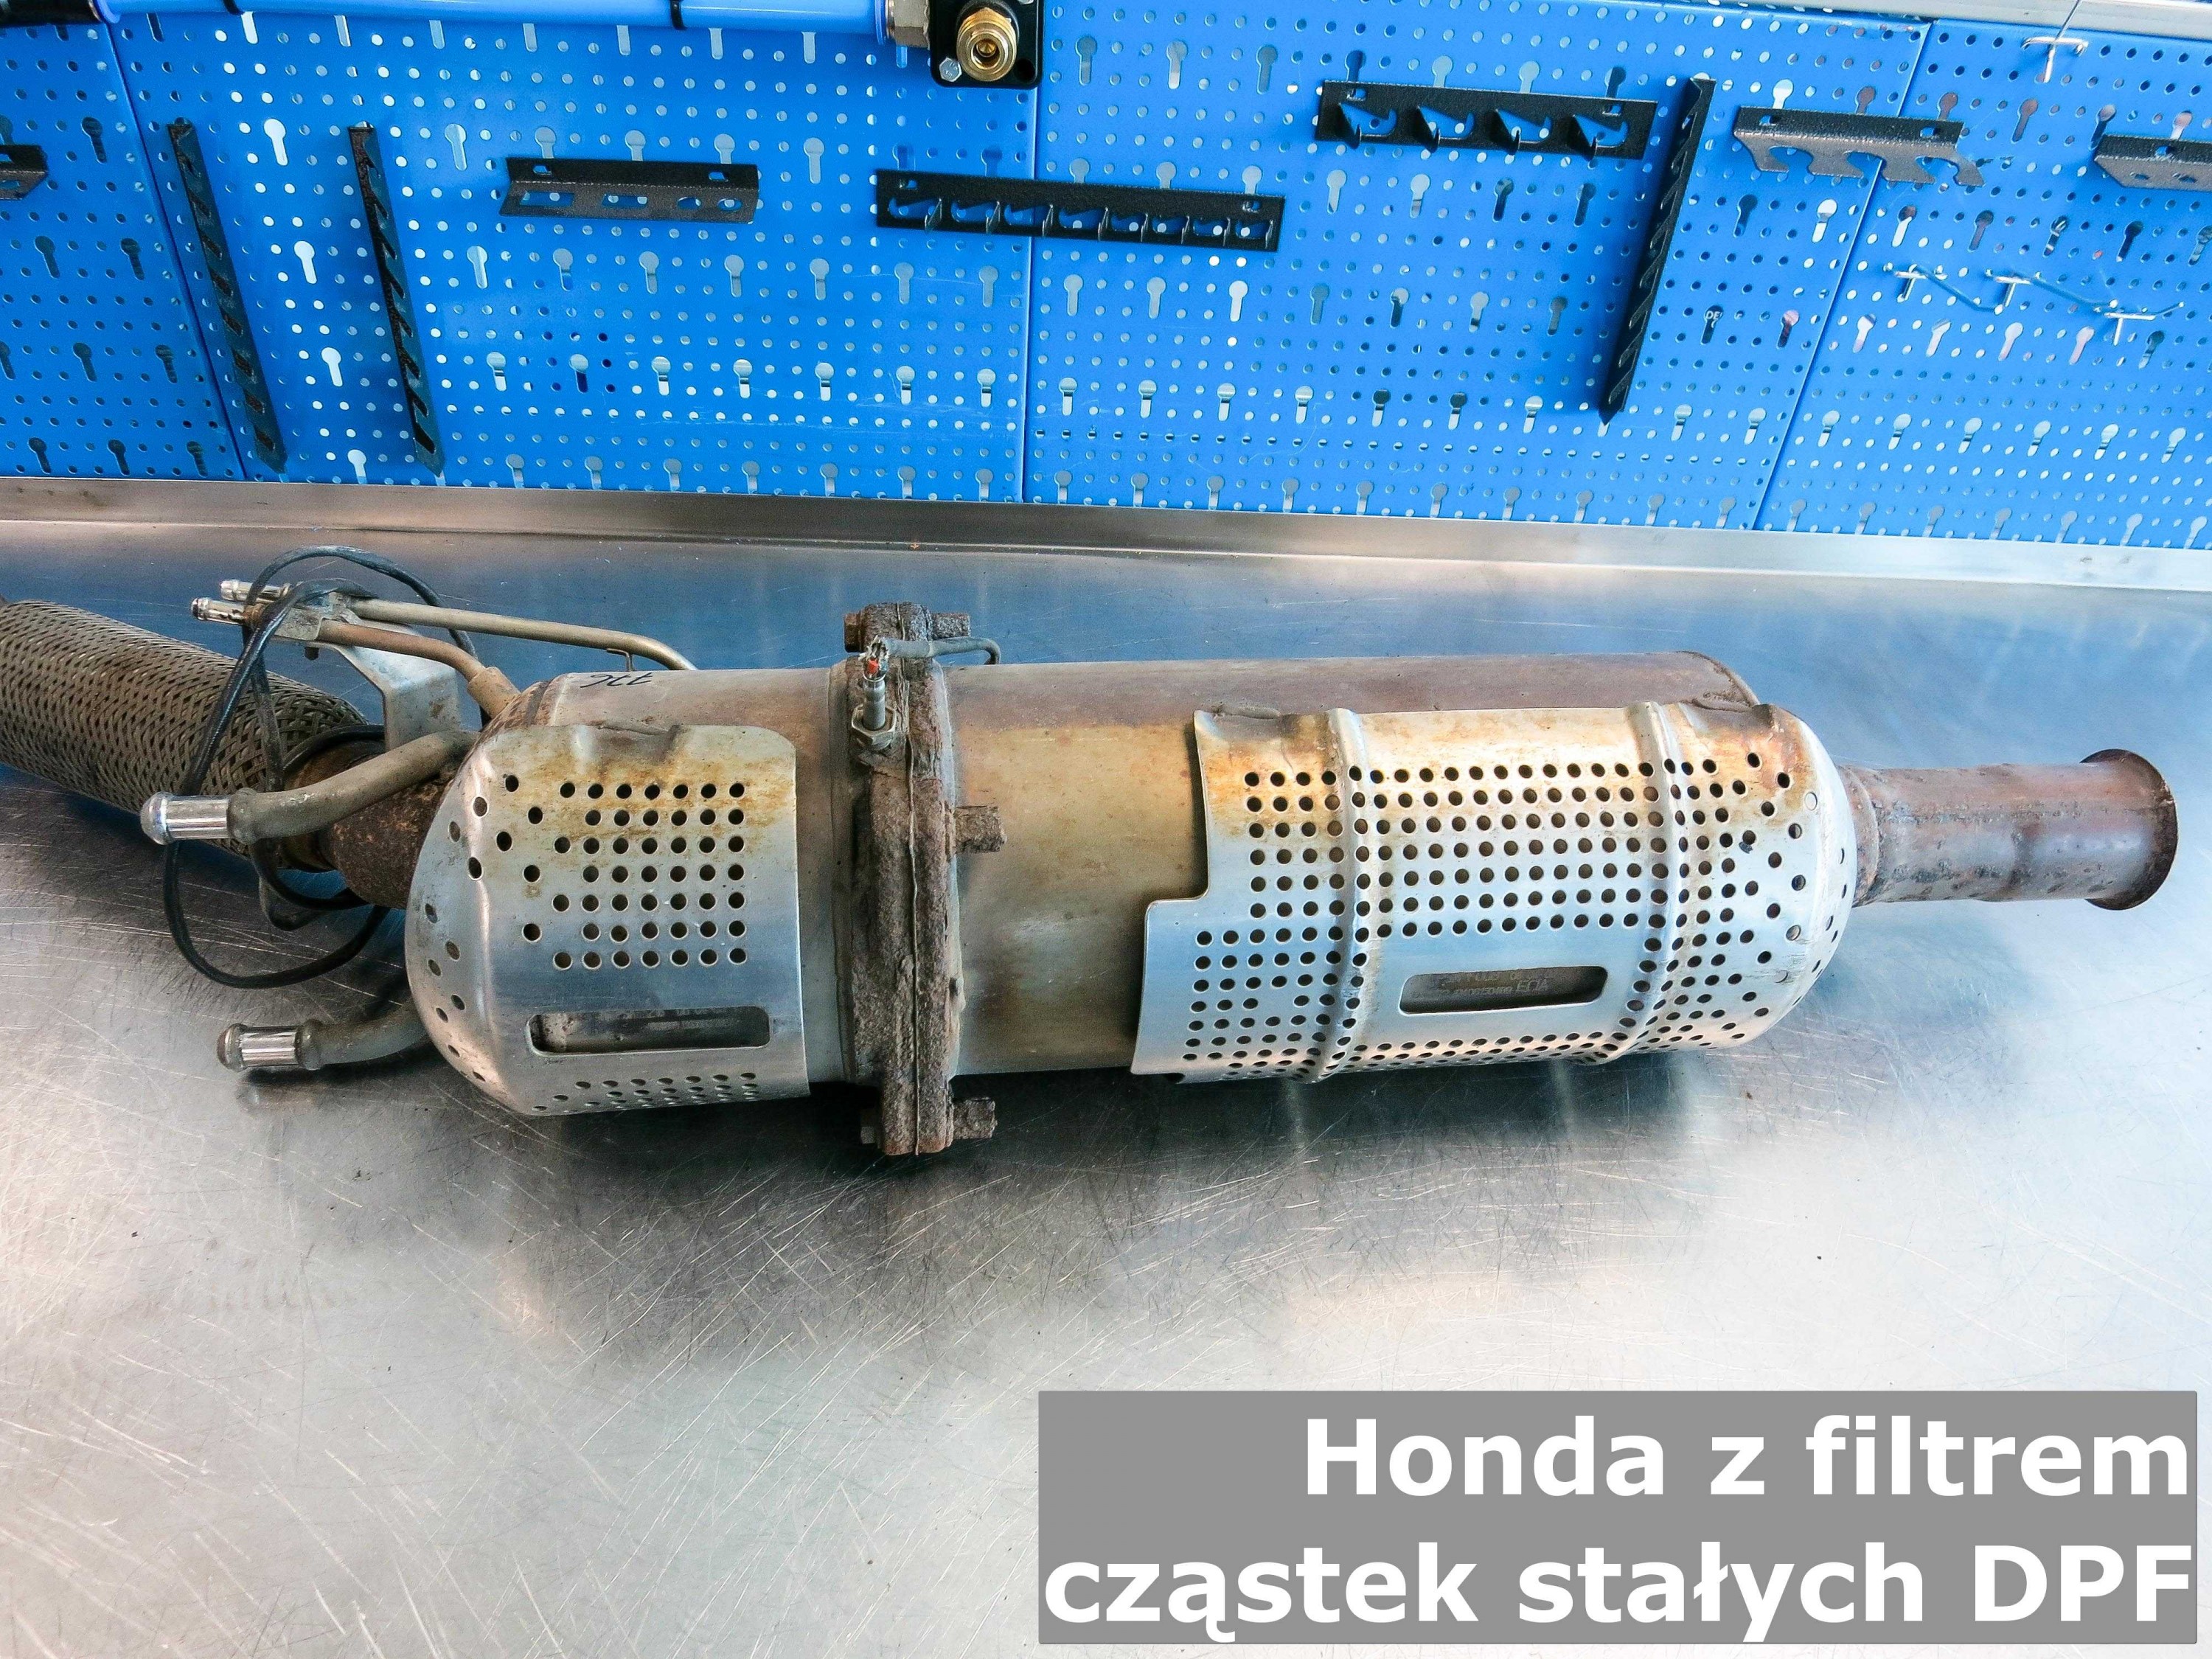 Wypalanie DPF Honda część 2 filtrydpffap.pl